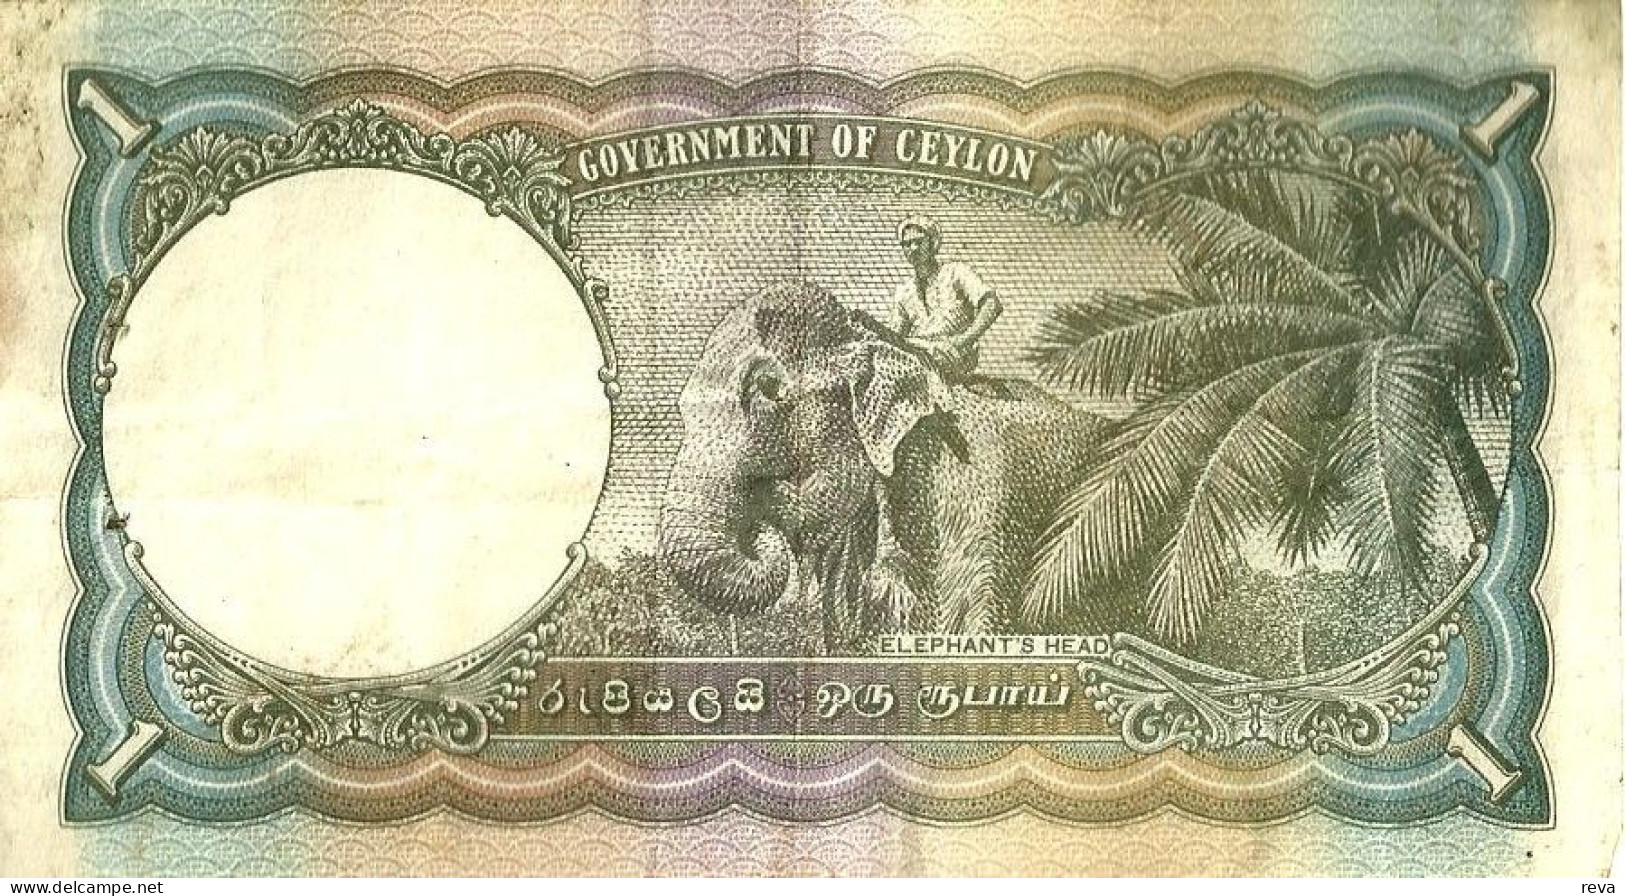 SRI LANKA CEYLON 1 RUPEE PURPLE KGVI MAN FRONT & ELEPHANT BACK DATED 01-02-1941 P.34 F+ READ DESCRIPTION CAREFULLY !!! - Sri Lanka